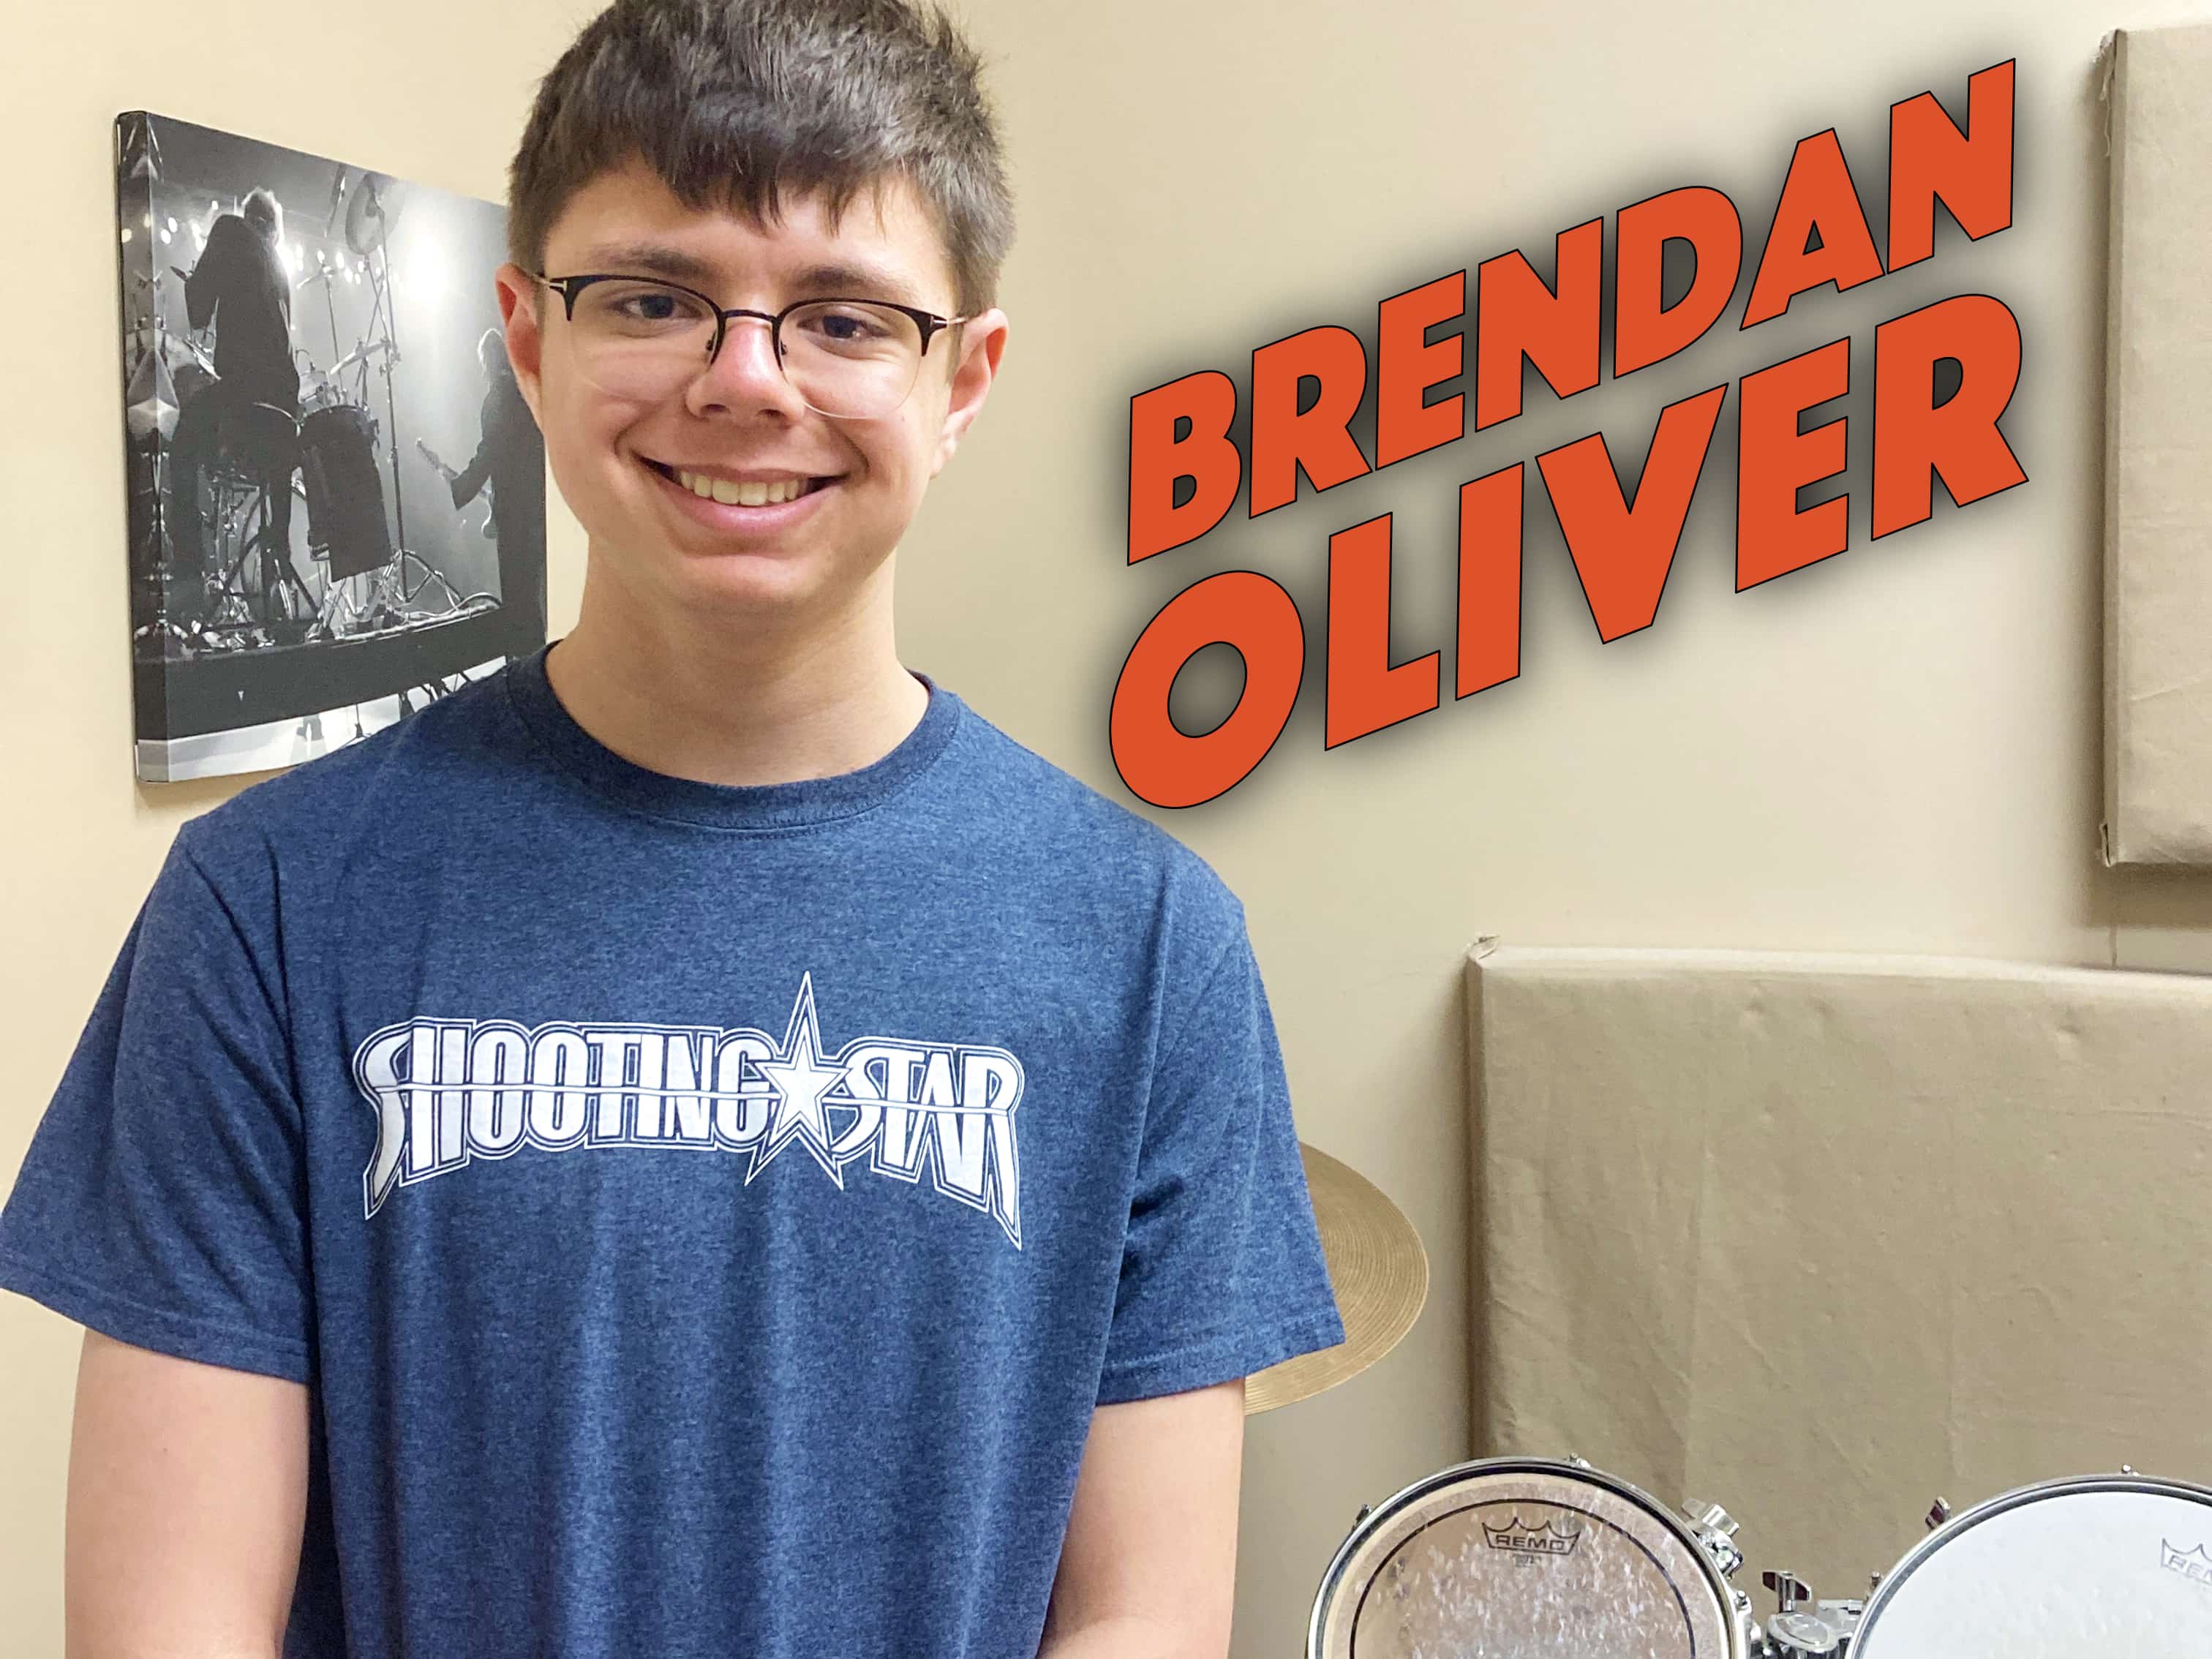 drum student Brendan Oliver